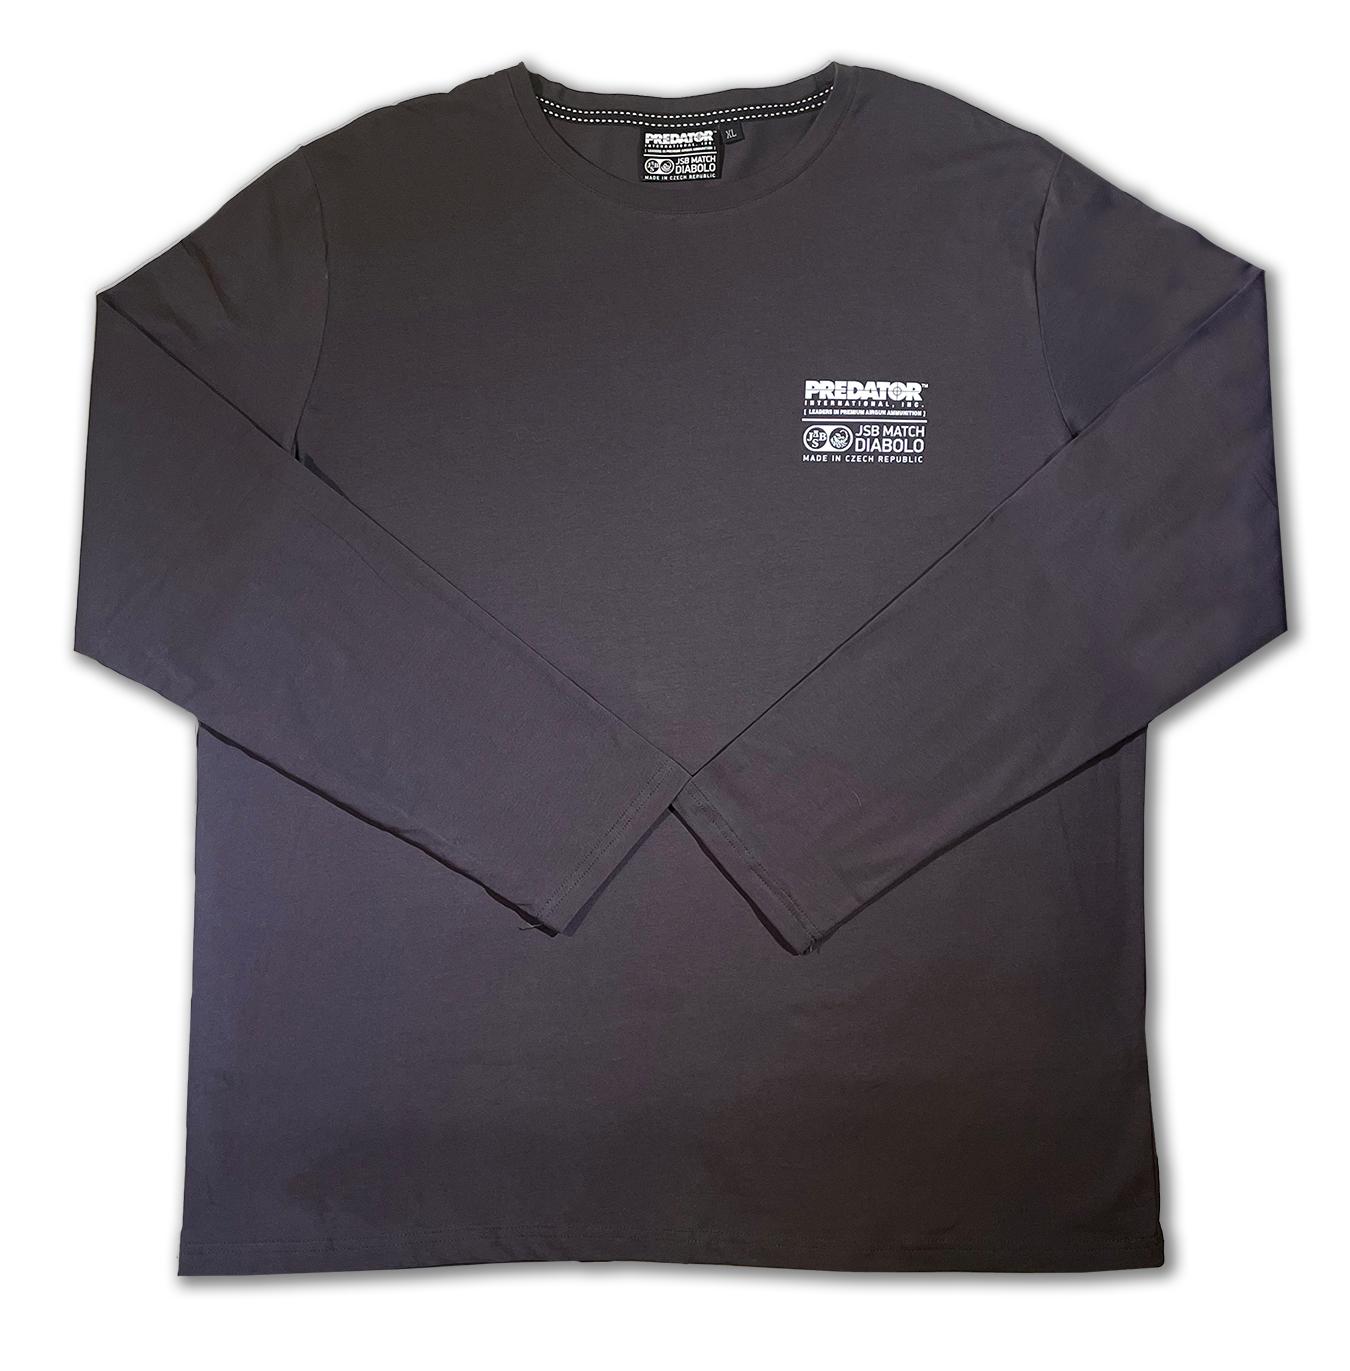 JSB Predator Long Sleeve Cotton/Spandex T-Shirt, Grey, Large